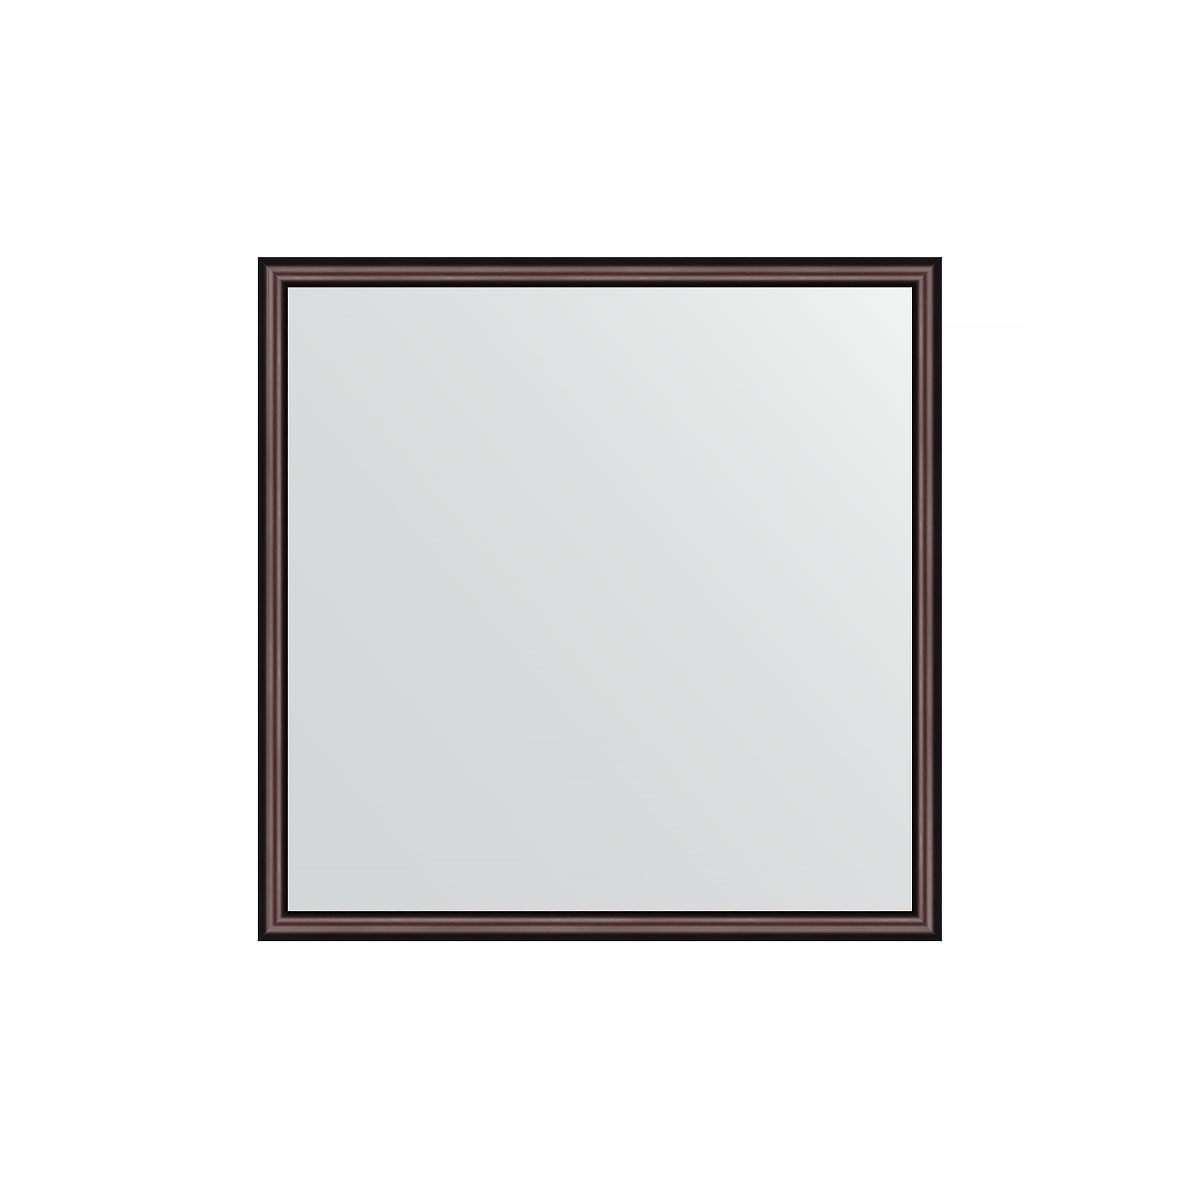 Зеркало в багетной раме Evoform махагон 22 мм 58х58 см зеркало 58х58 см вишня evoform definite by 0602